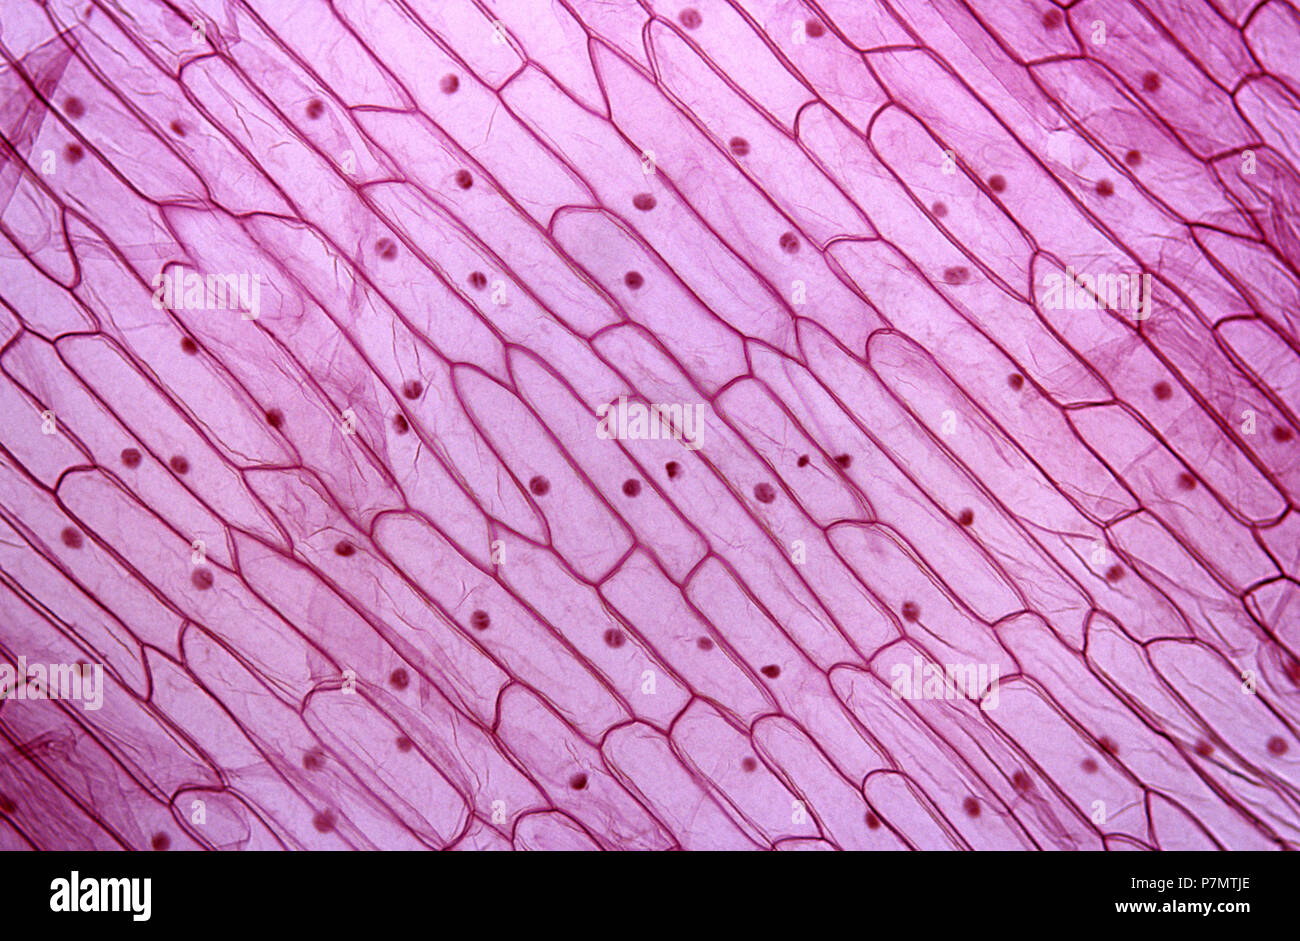 Cells of epidermis of Garden Onion (Allium cepa) Stock Photo